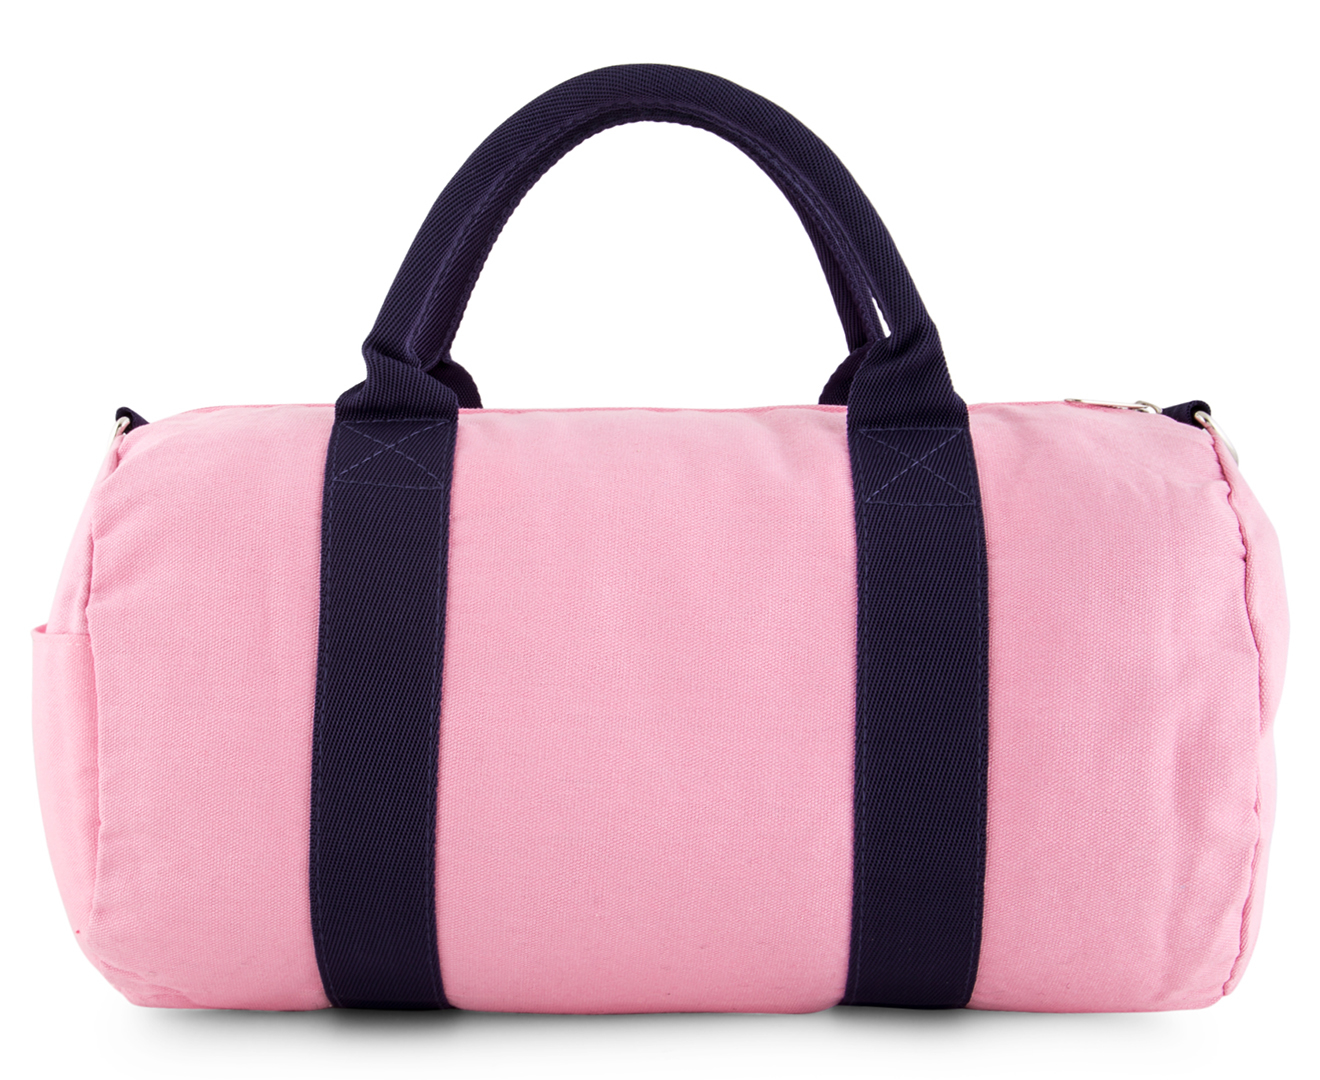 Hilfiger 10L Mini Duffle Bag Navy/Pink | Catch.com.au